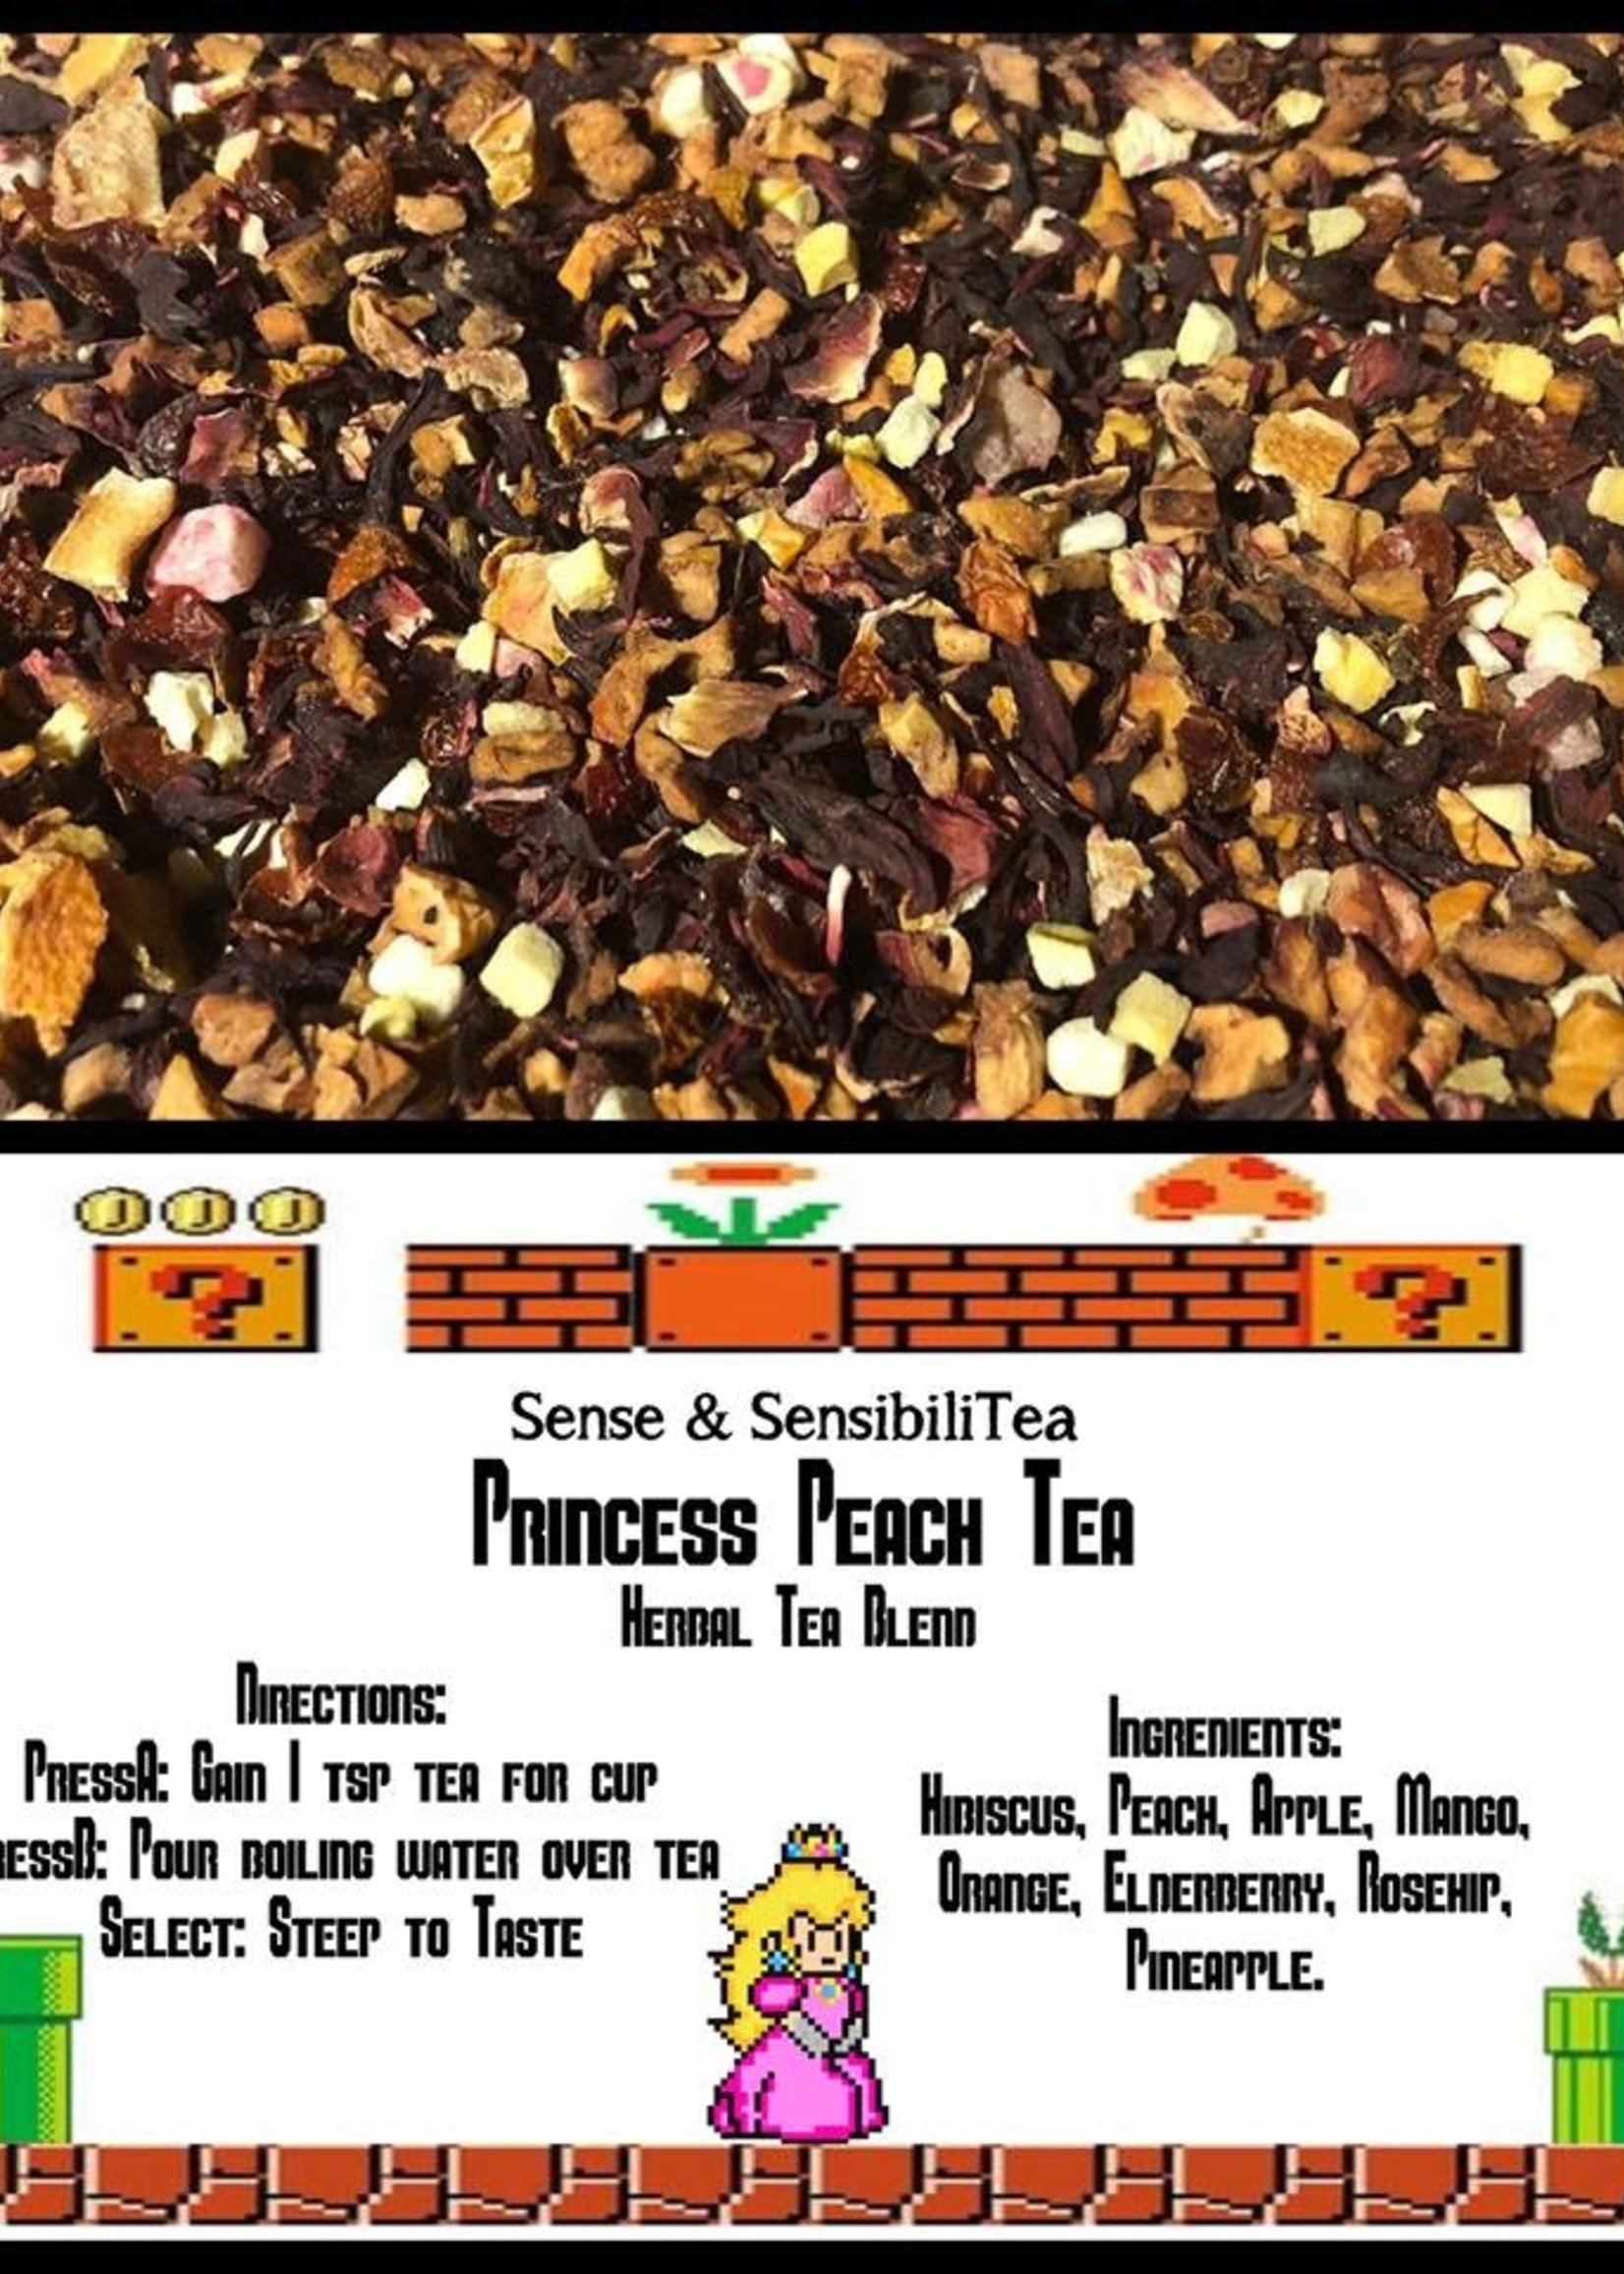 Sense and SensibiliTea 100g Princess Peach (Herbal Tea)– Fruit and Hibiscus